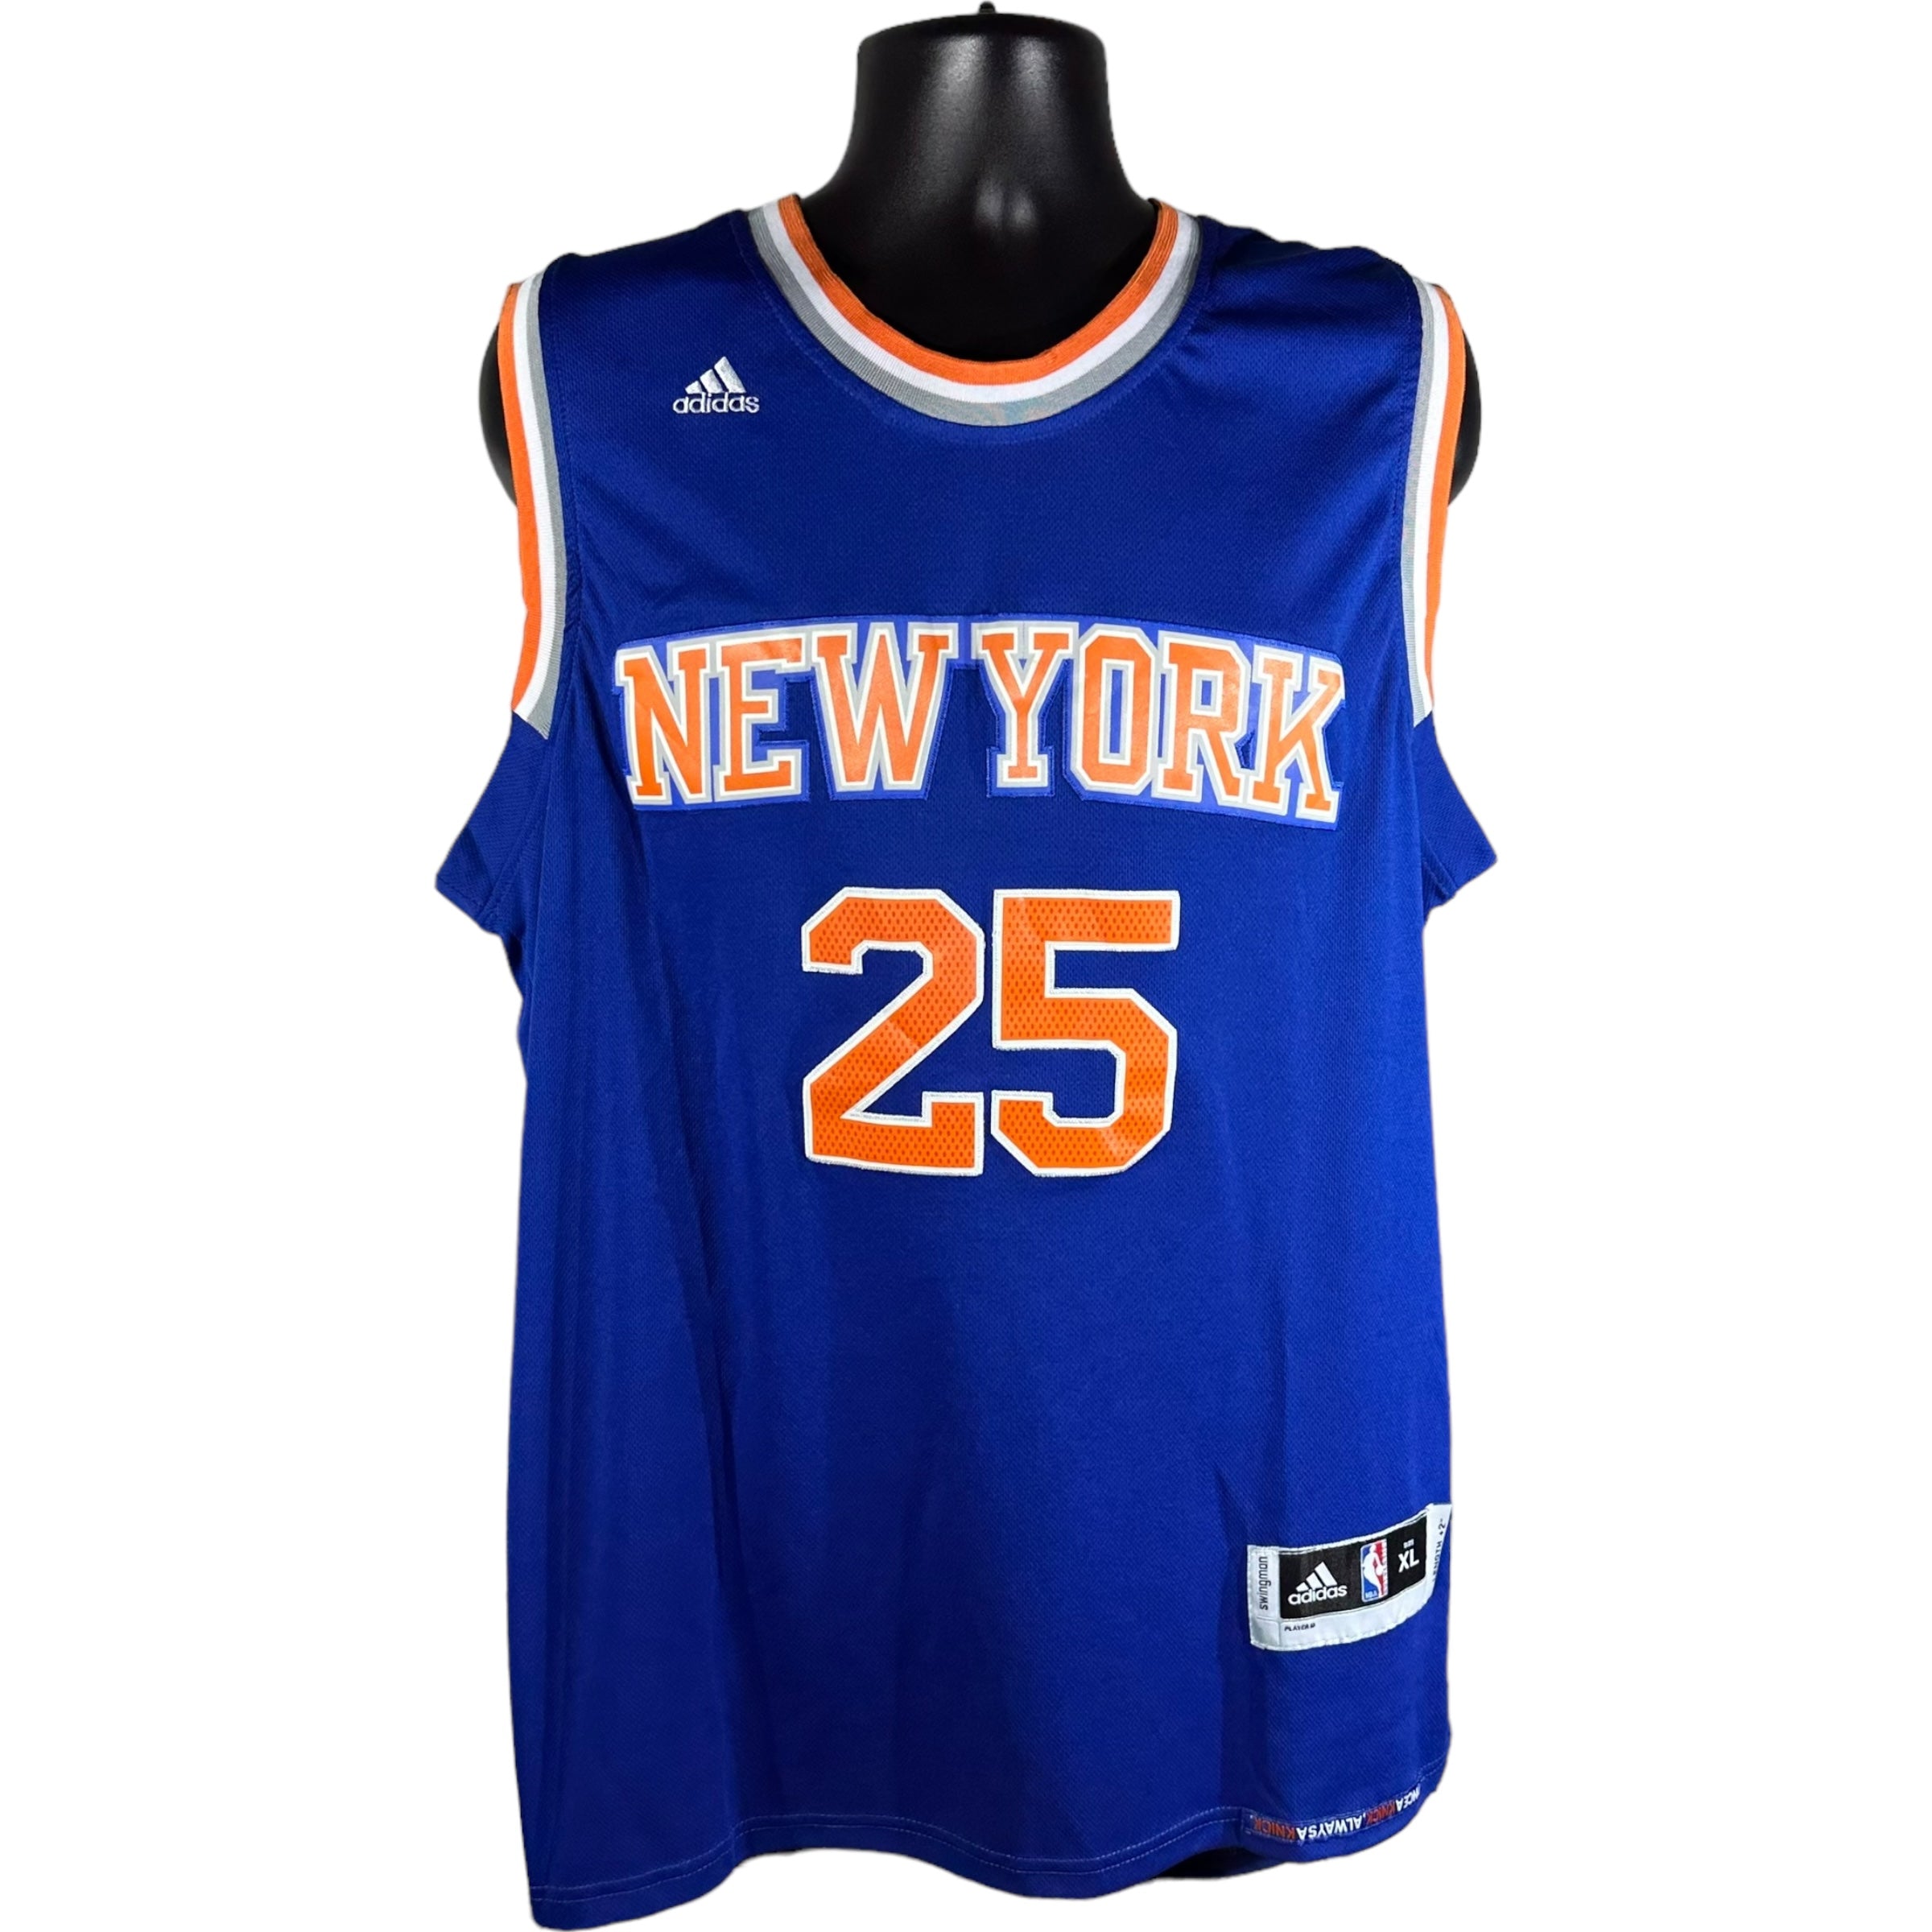 Vintage New York Knicks #25 Derrick Rose Jersey